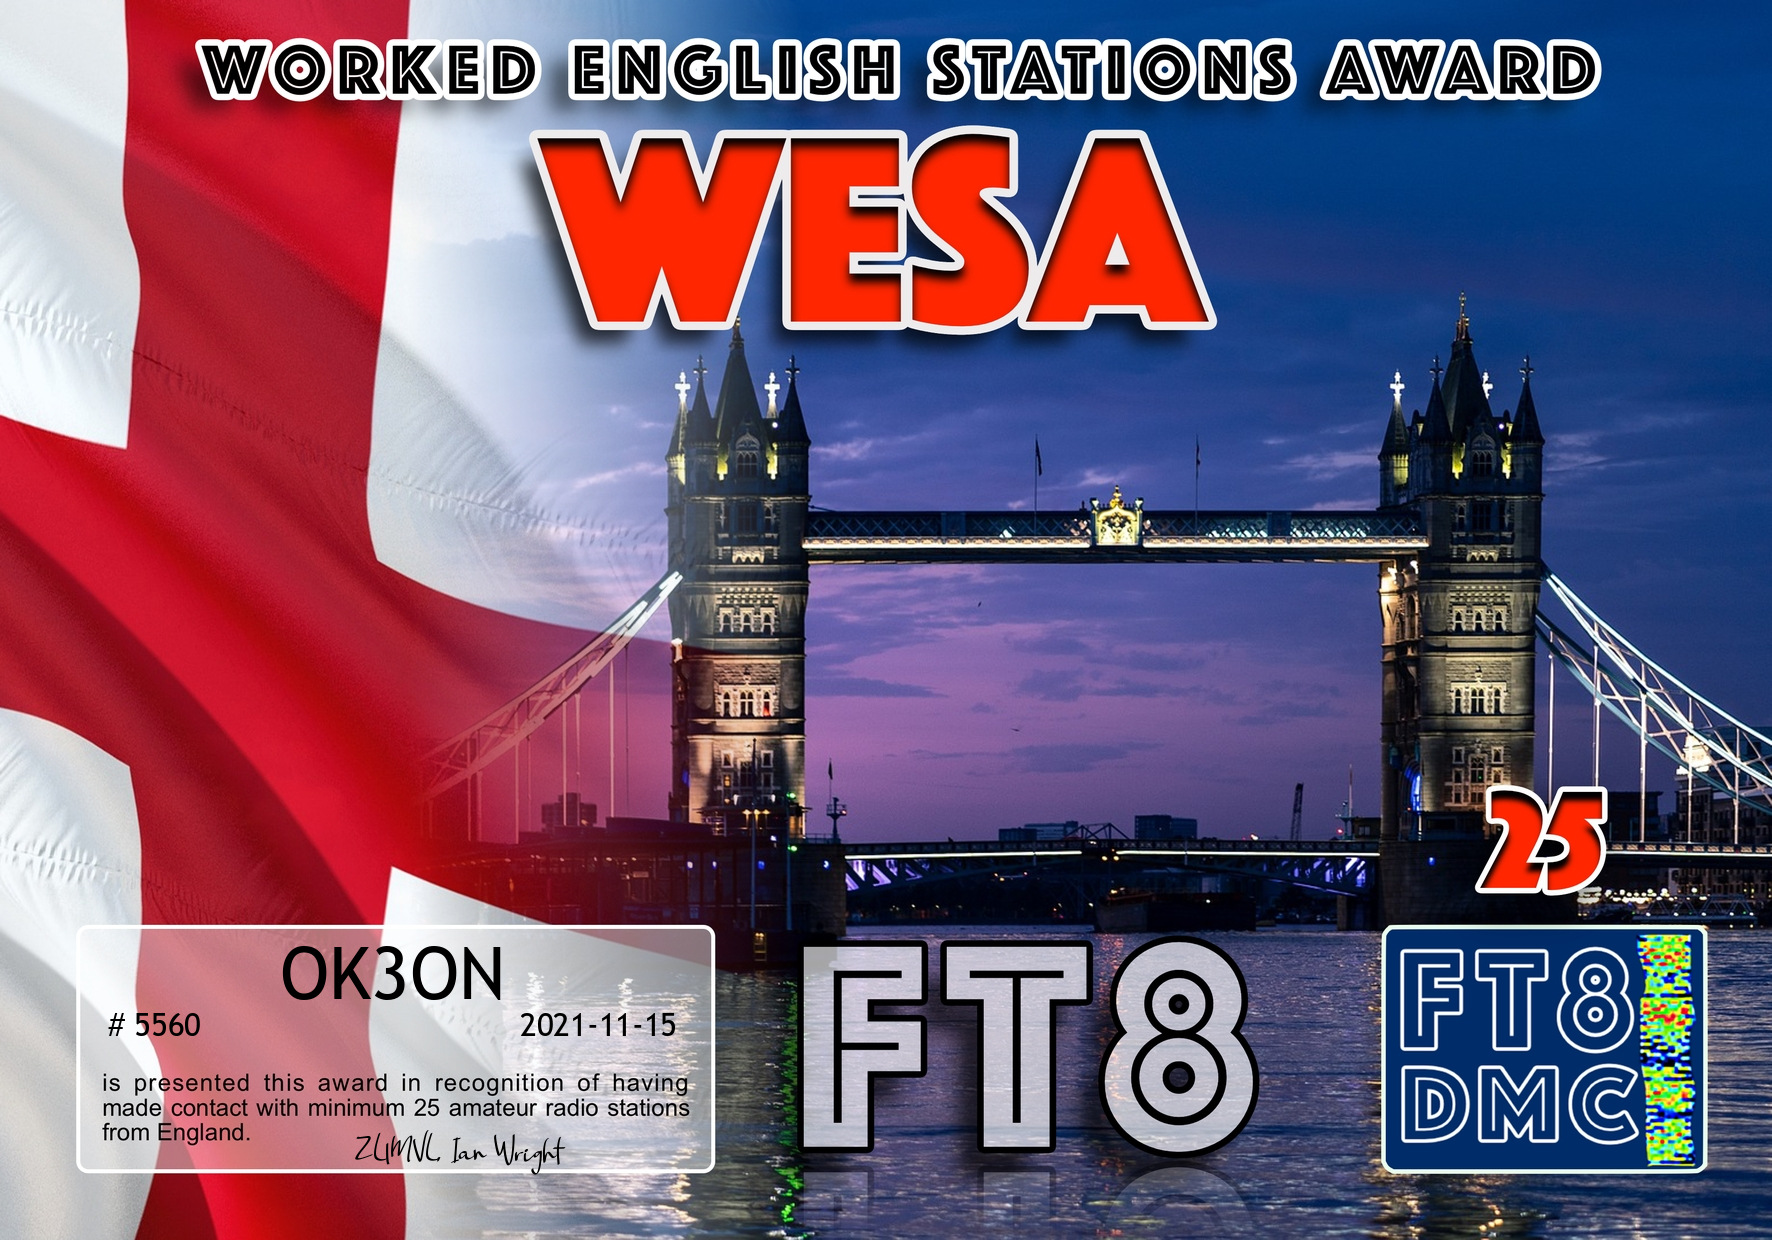 awards/OK3ON-WESA-II_FT8DMC.jpg